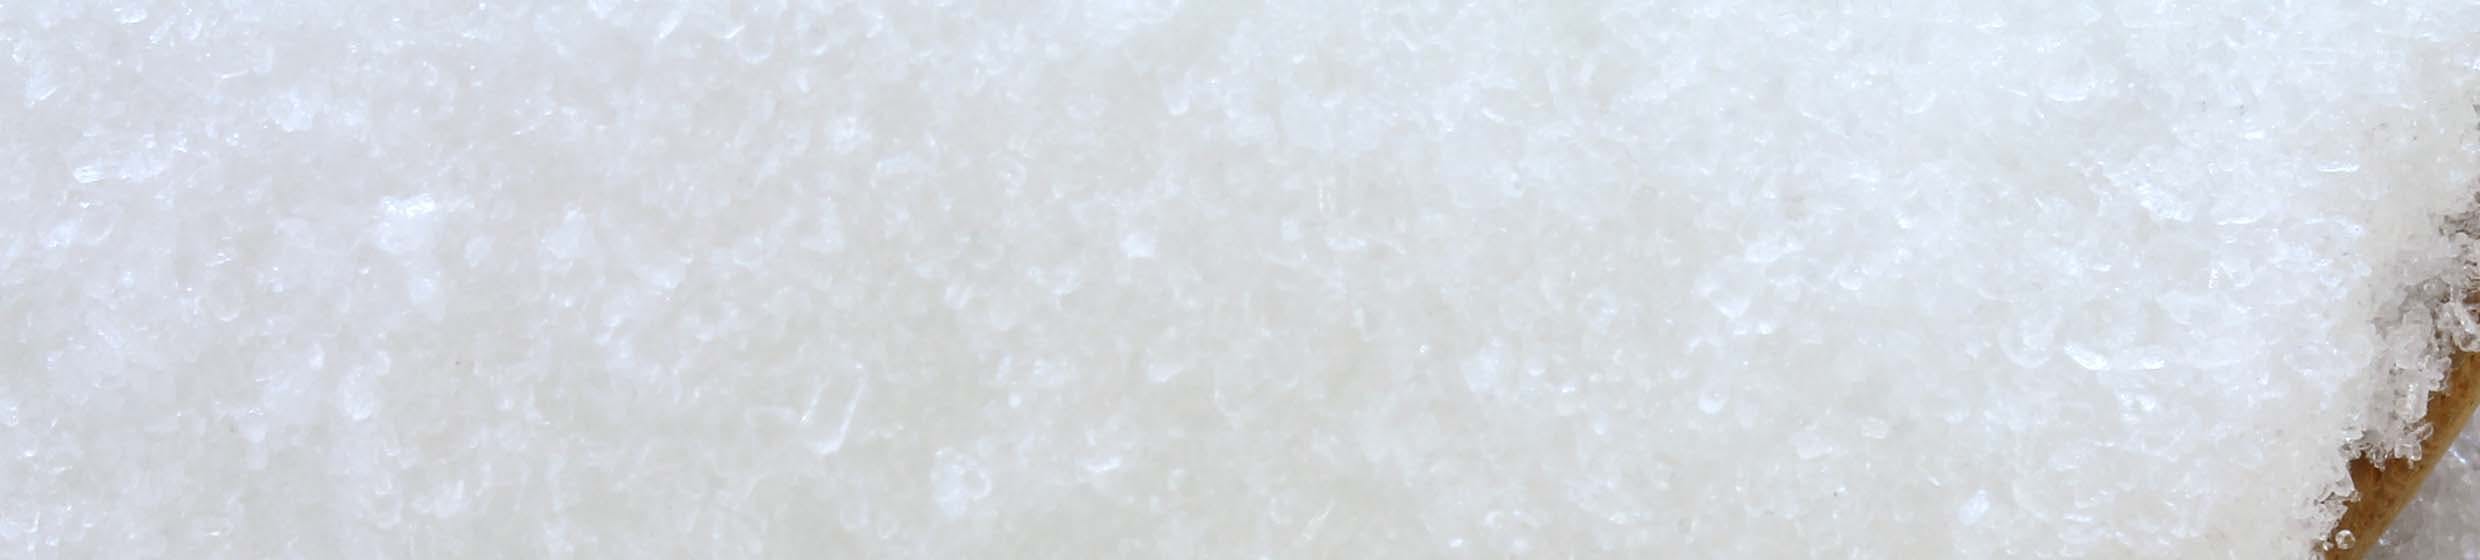 Sulfate de magnésium (sel d'Epsom)